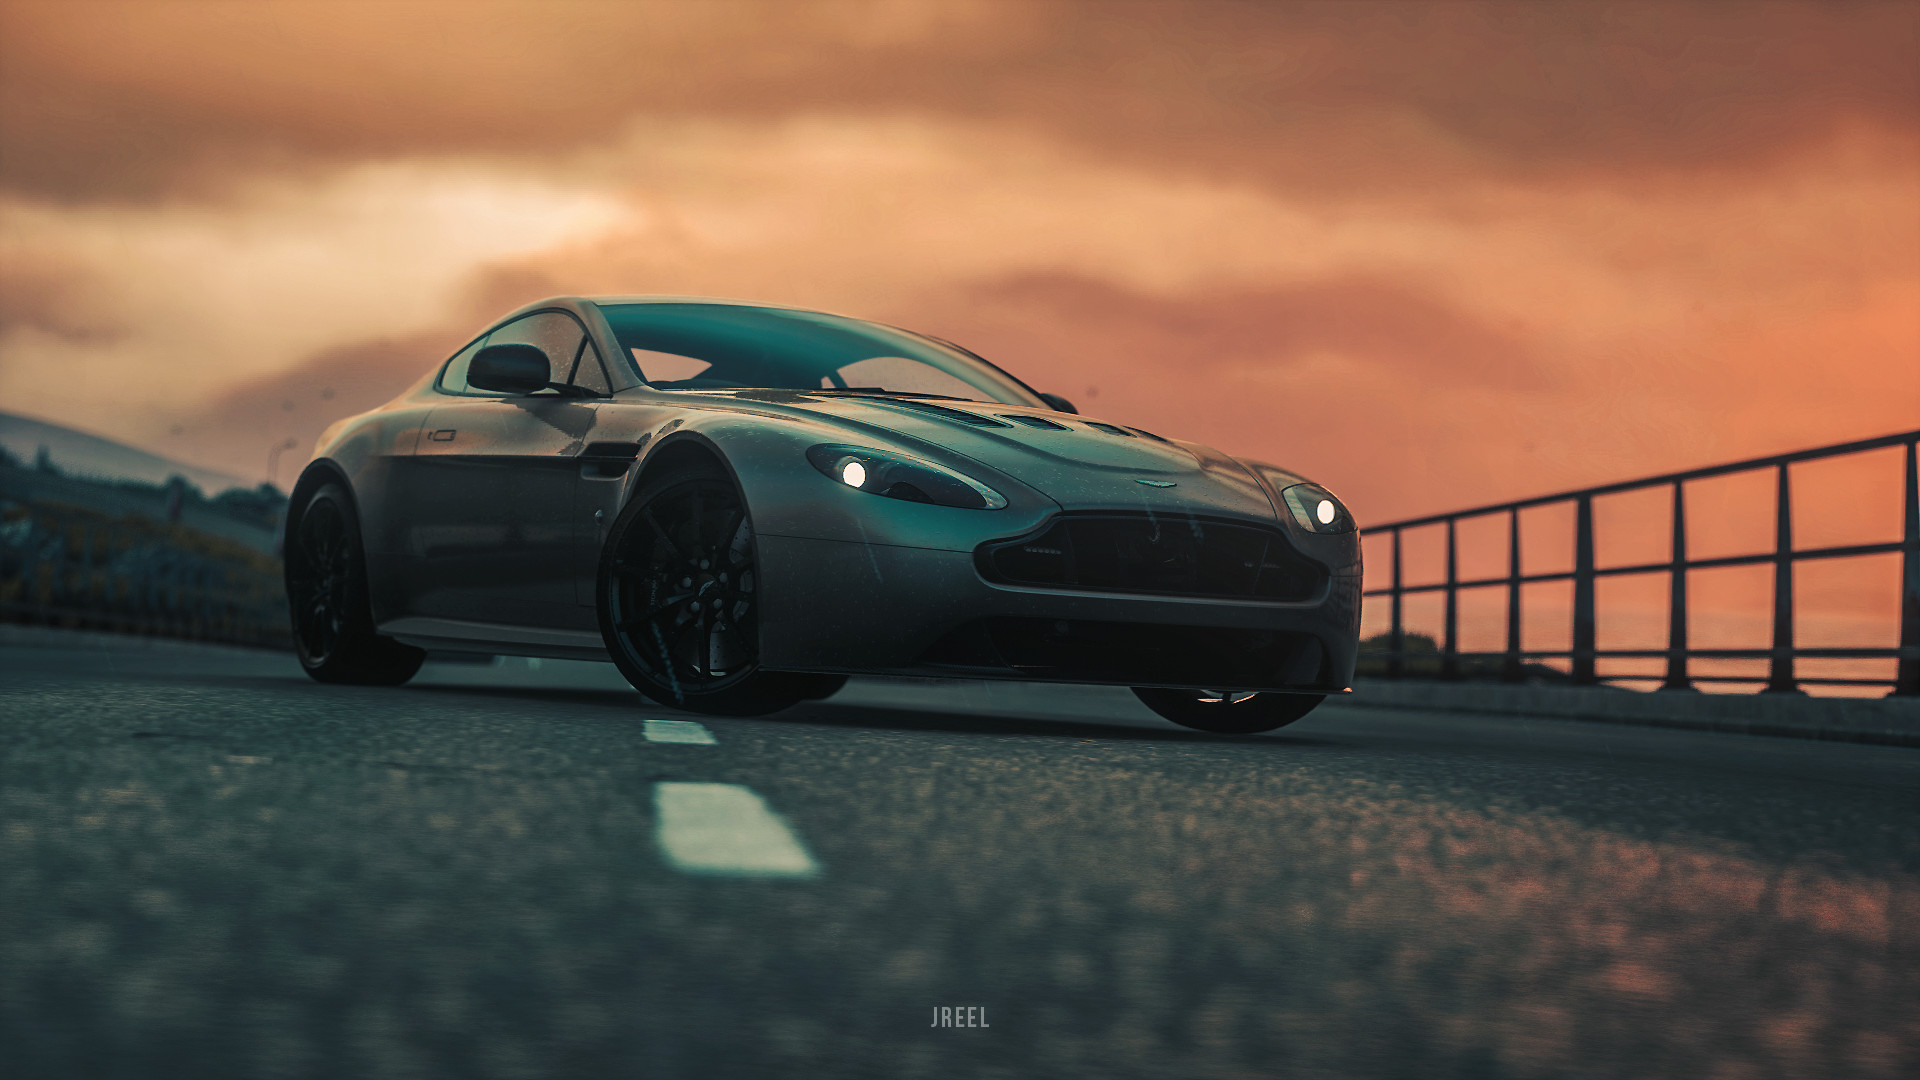 Aston Martin V12 Vantage HD Wallpaper and Background